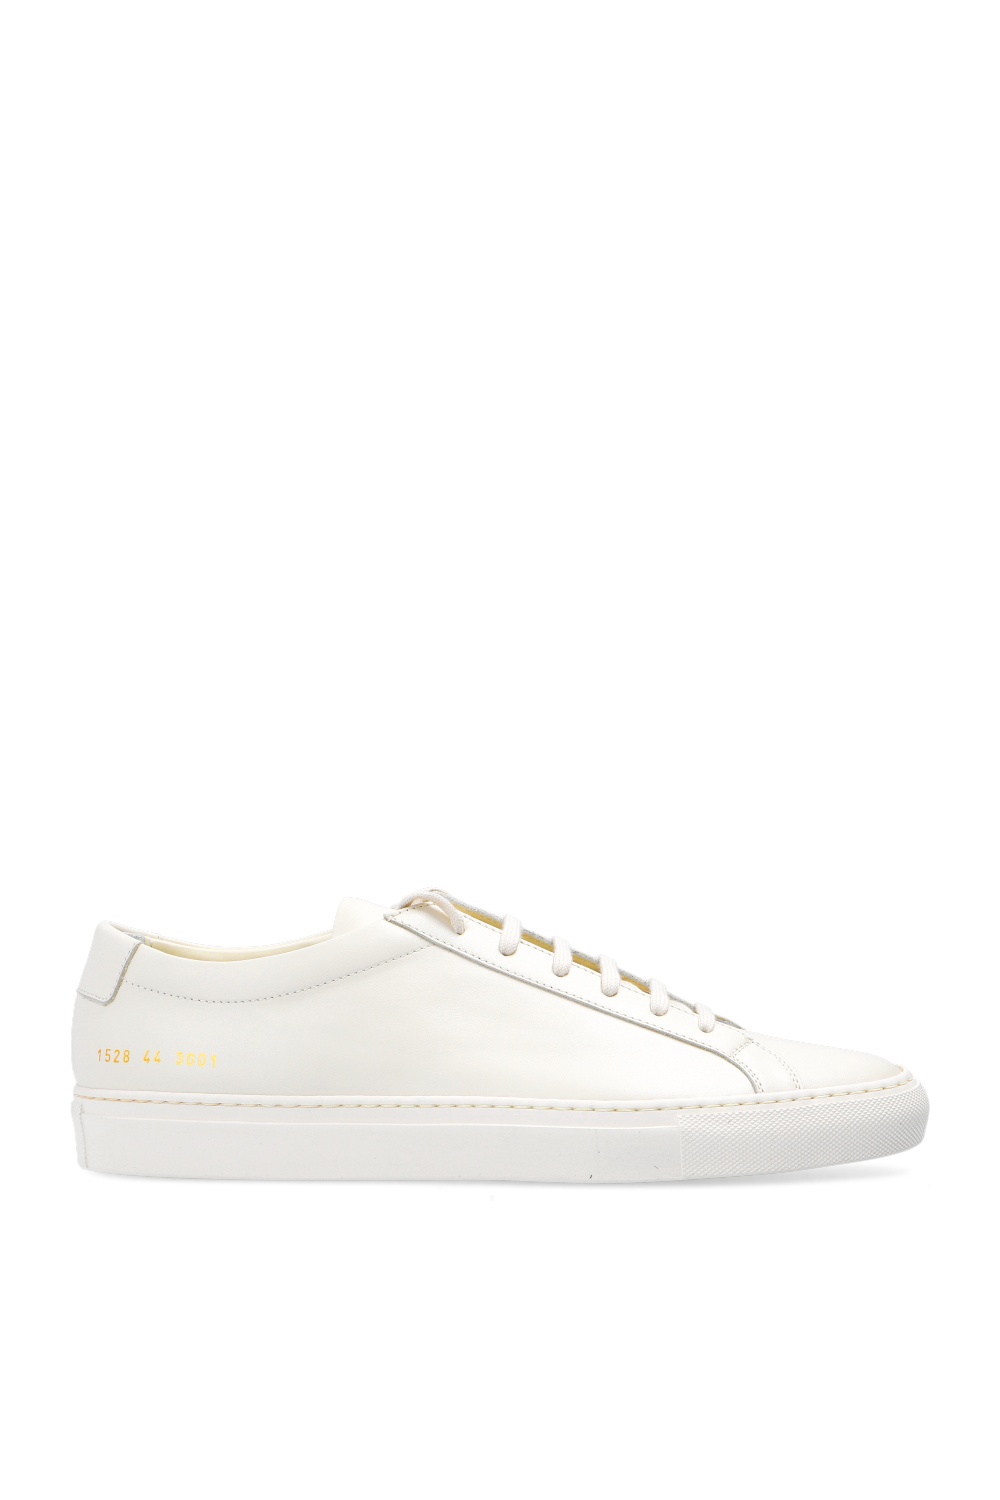 Louis Vuitton Gloria Flat Loafers - Vitkac shop online